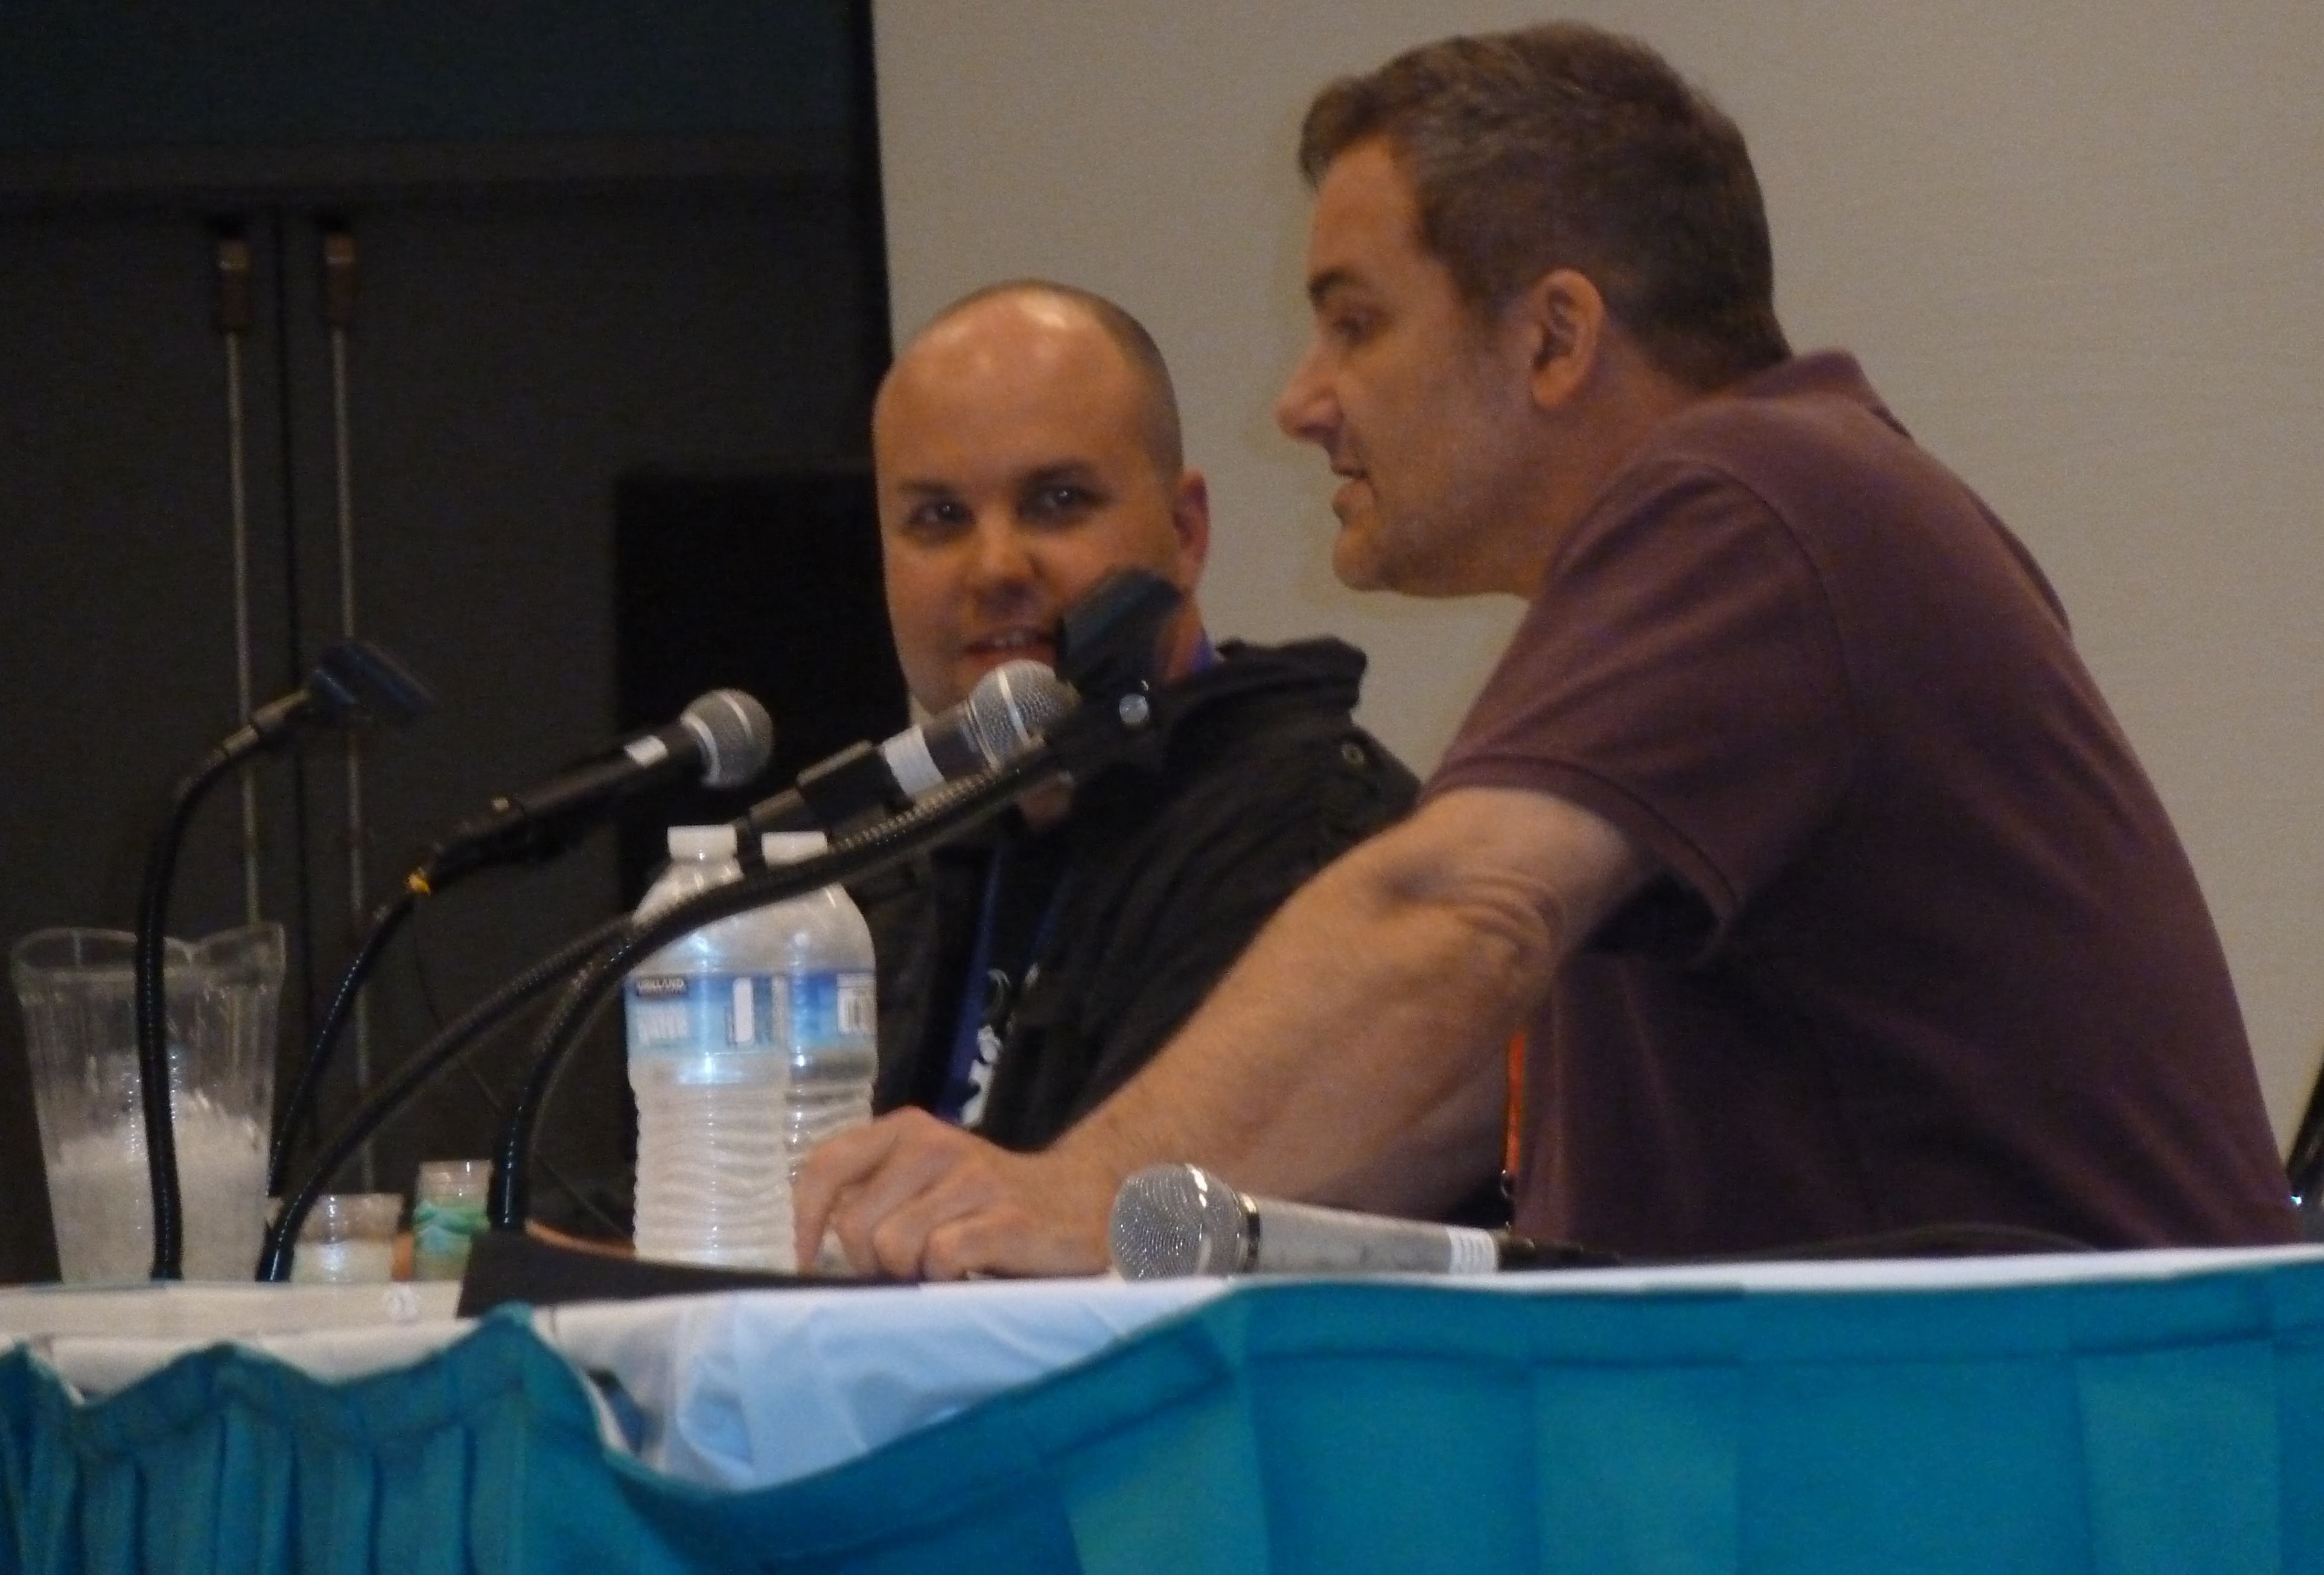 Neo Edmund and Shane Black on stage at Comic Con talking about Iron Man 3. #neoedmund @neoedmund1